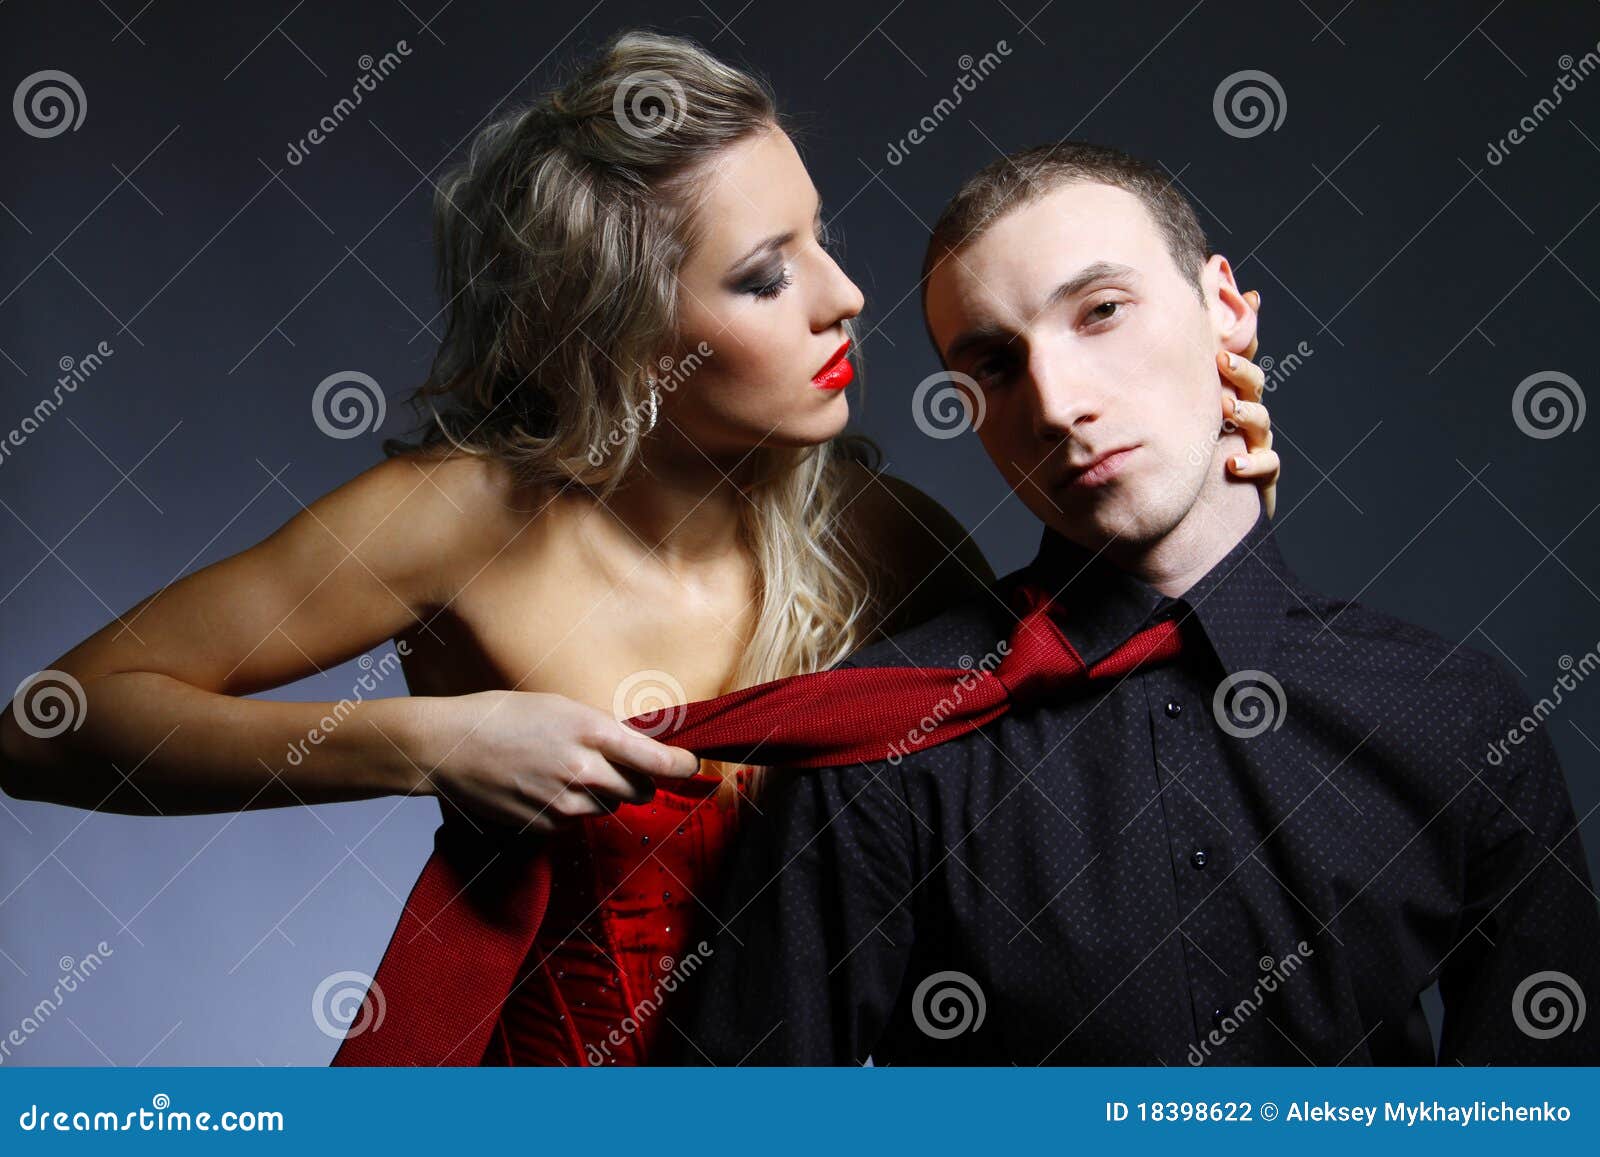 http://thumbs.dreamstime.com/z/woman-holding-man-tie-18398622.jpg